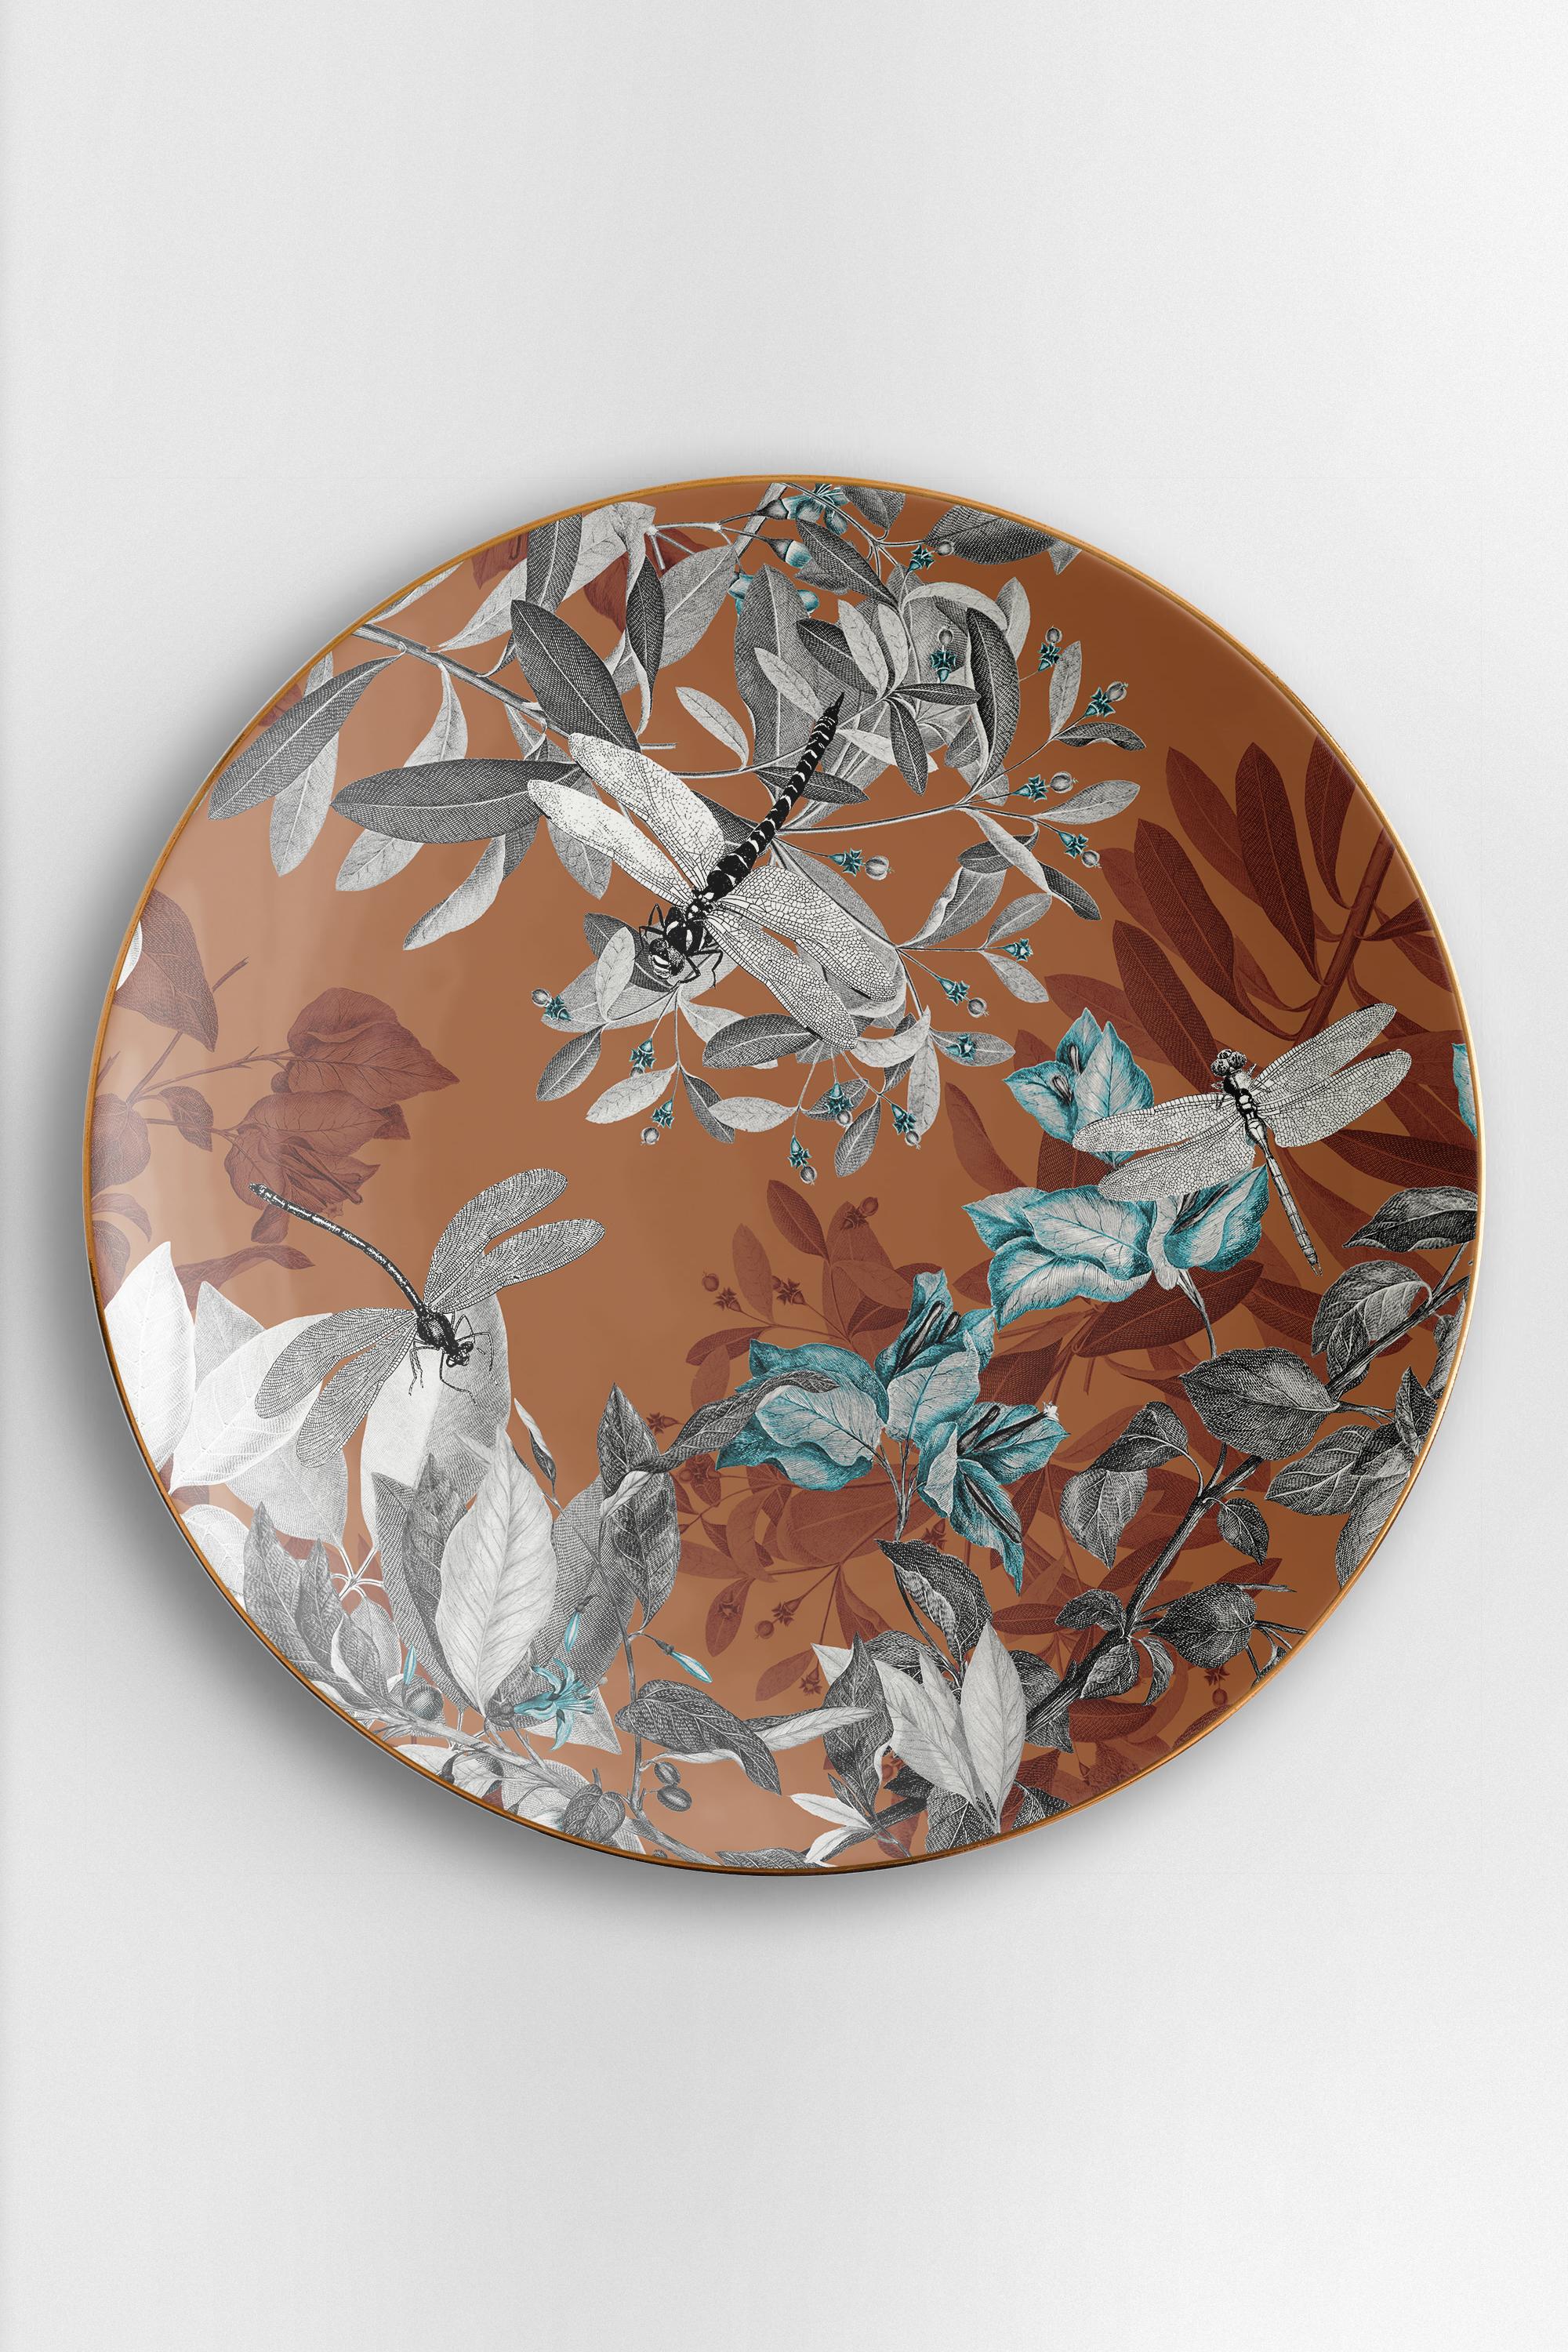 Black Dragon, Six Contemporary Porcelain Dinner Plates with Decorative Design For Sale 1